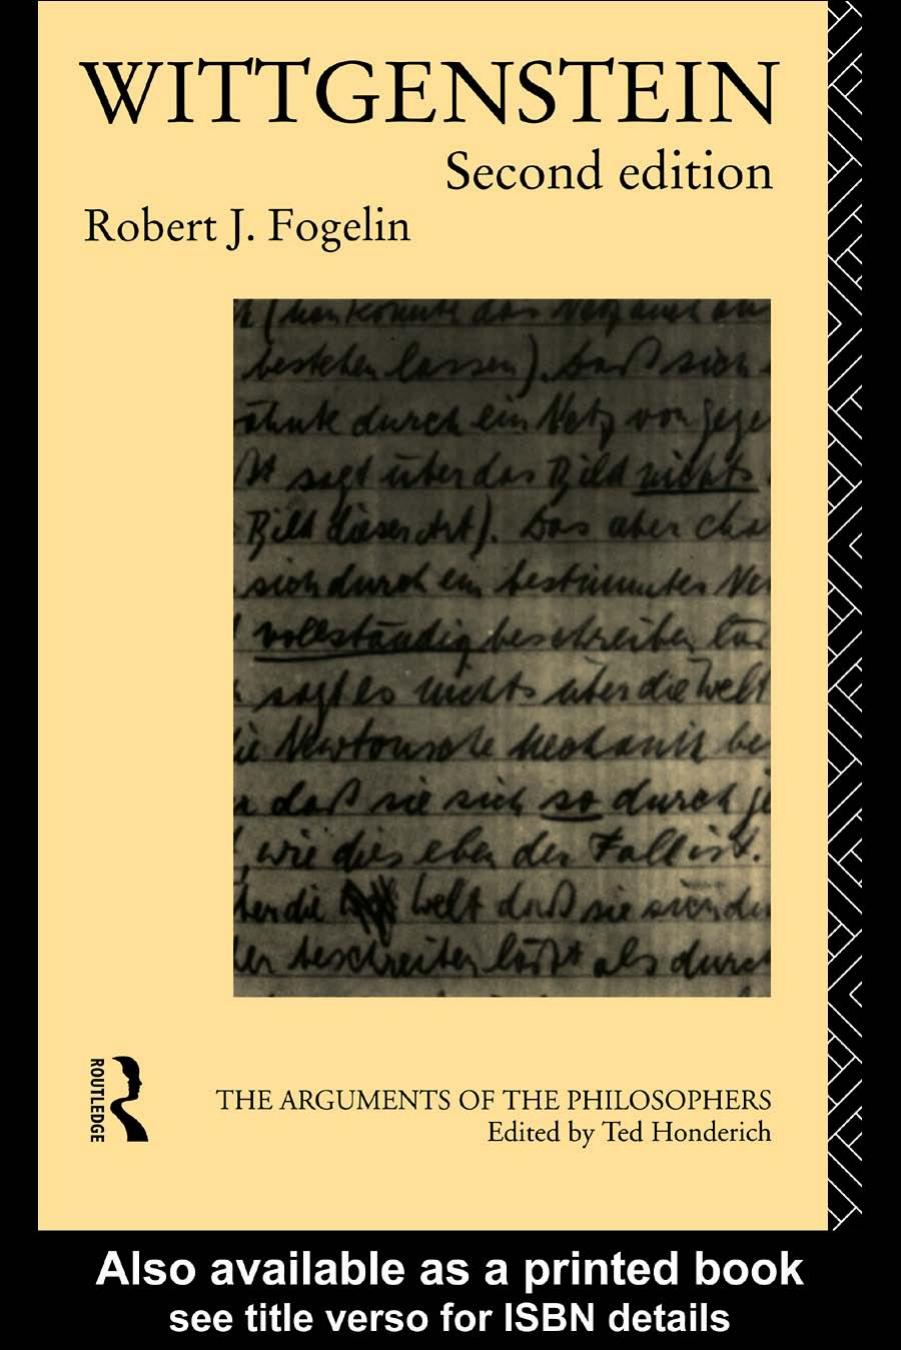 Wittgenstein (Arguments of the Philosophers) by Robert J. Fogelin